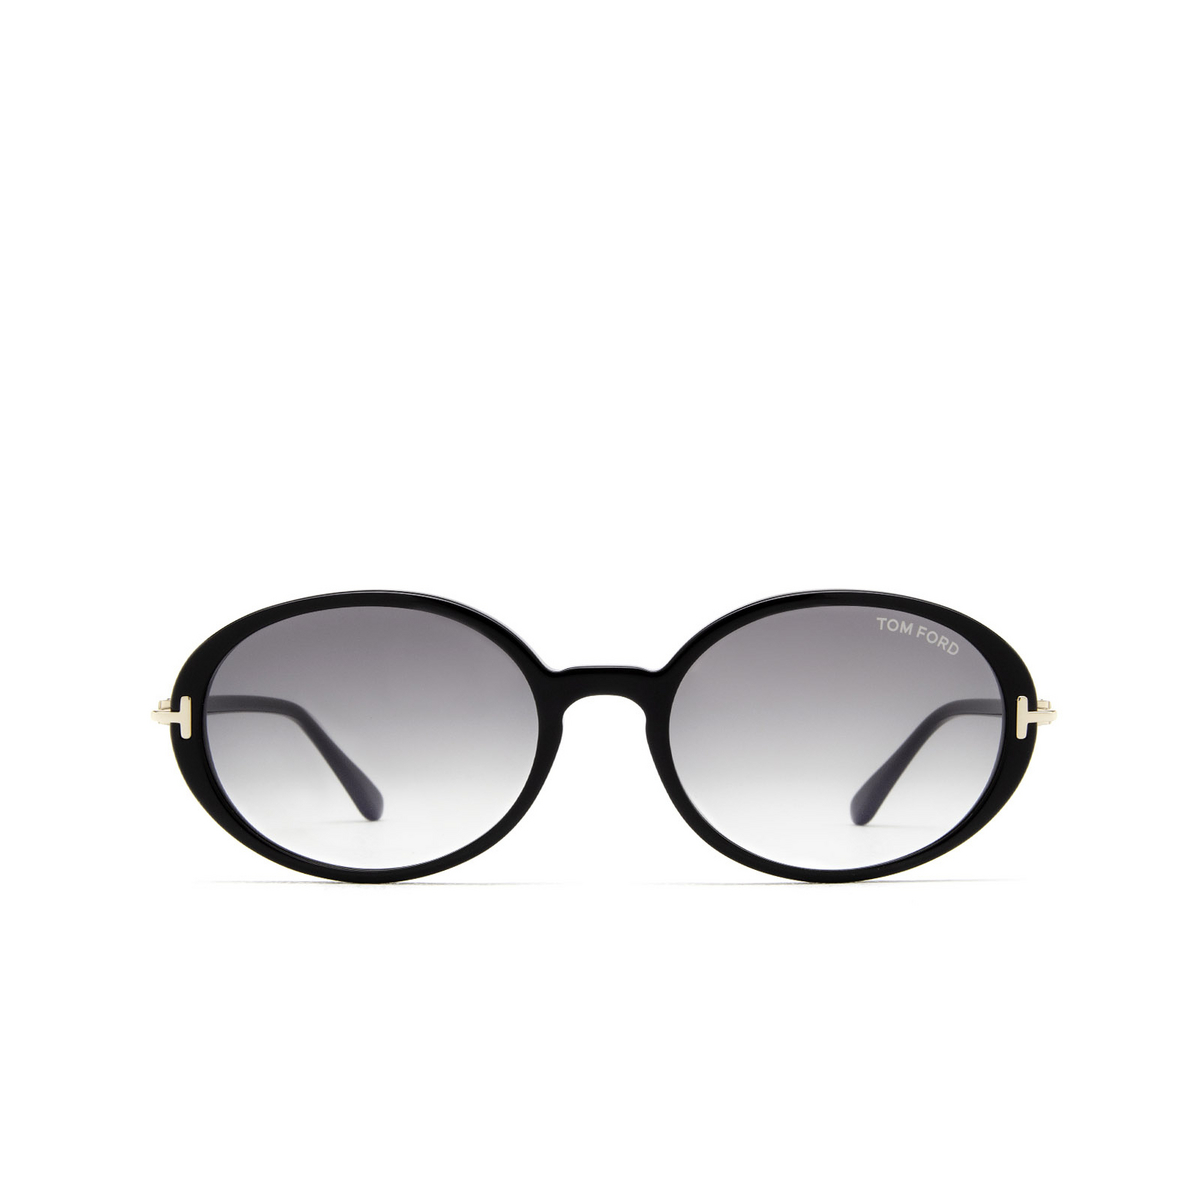 Tom Ford RAQUEL-02 Sunglasses 01B Black - front view